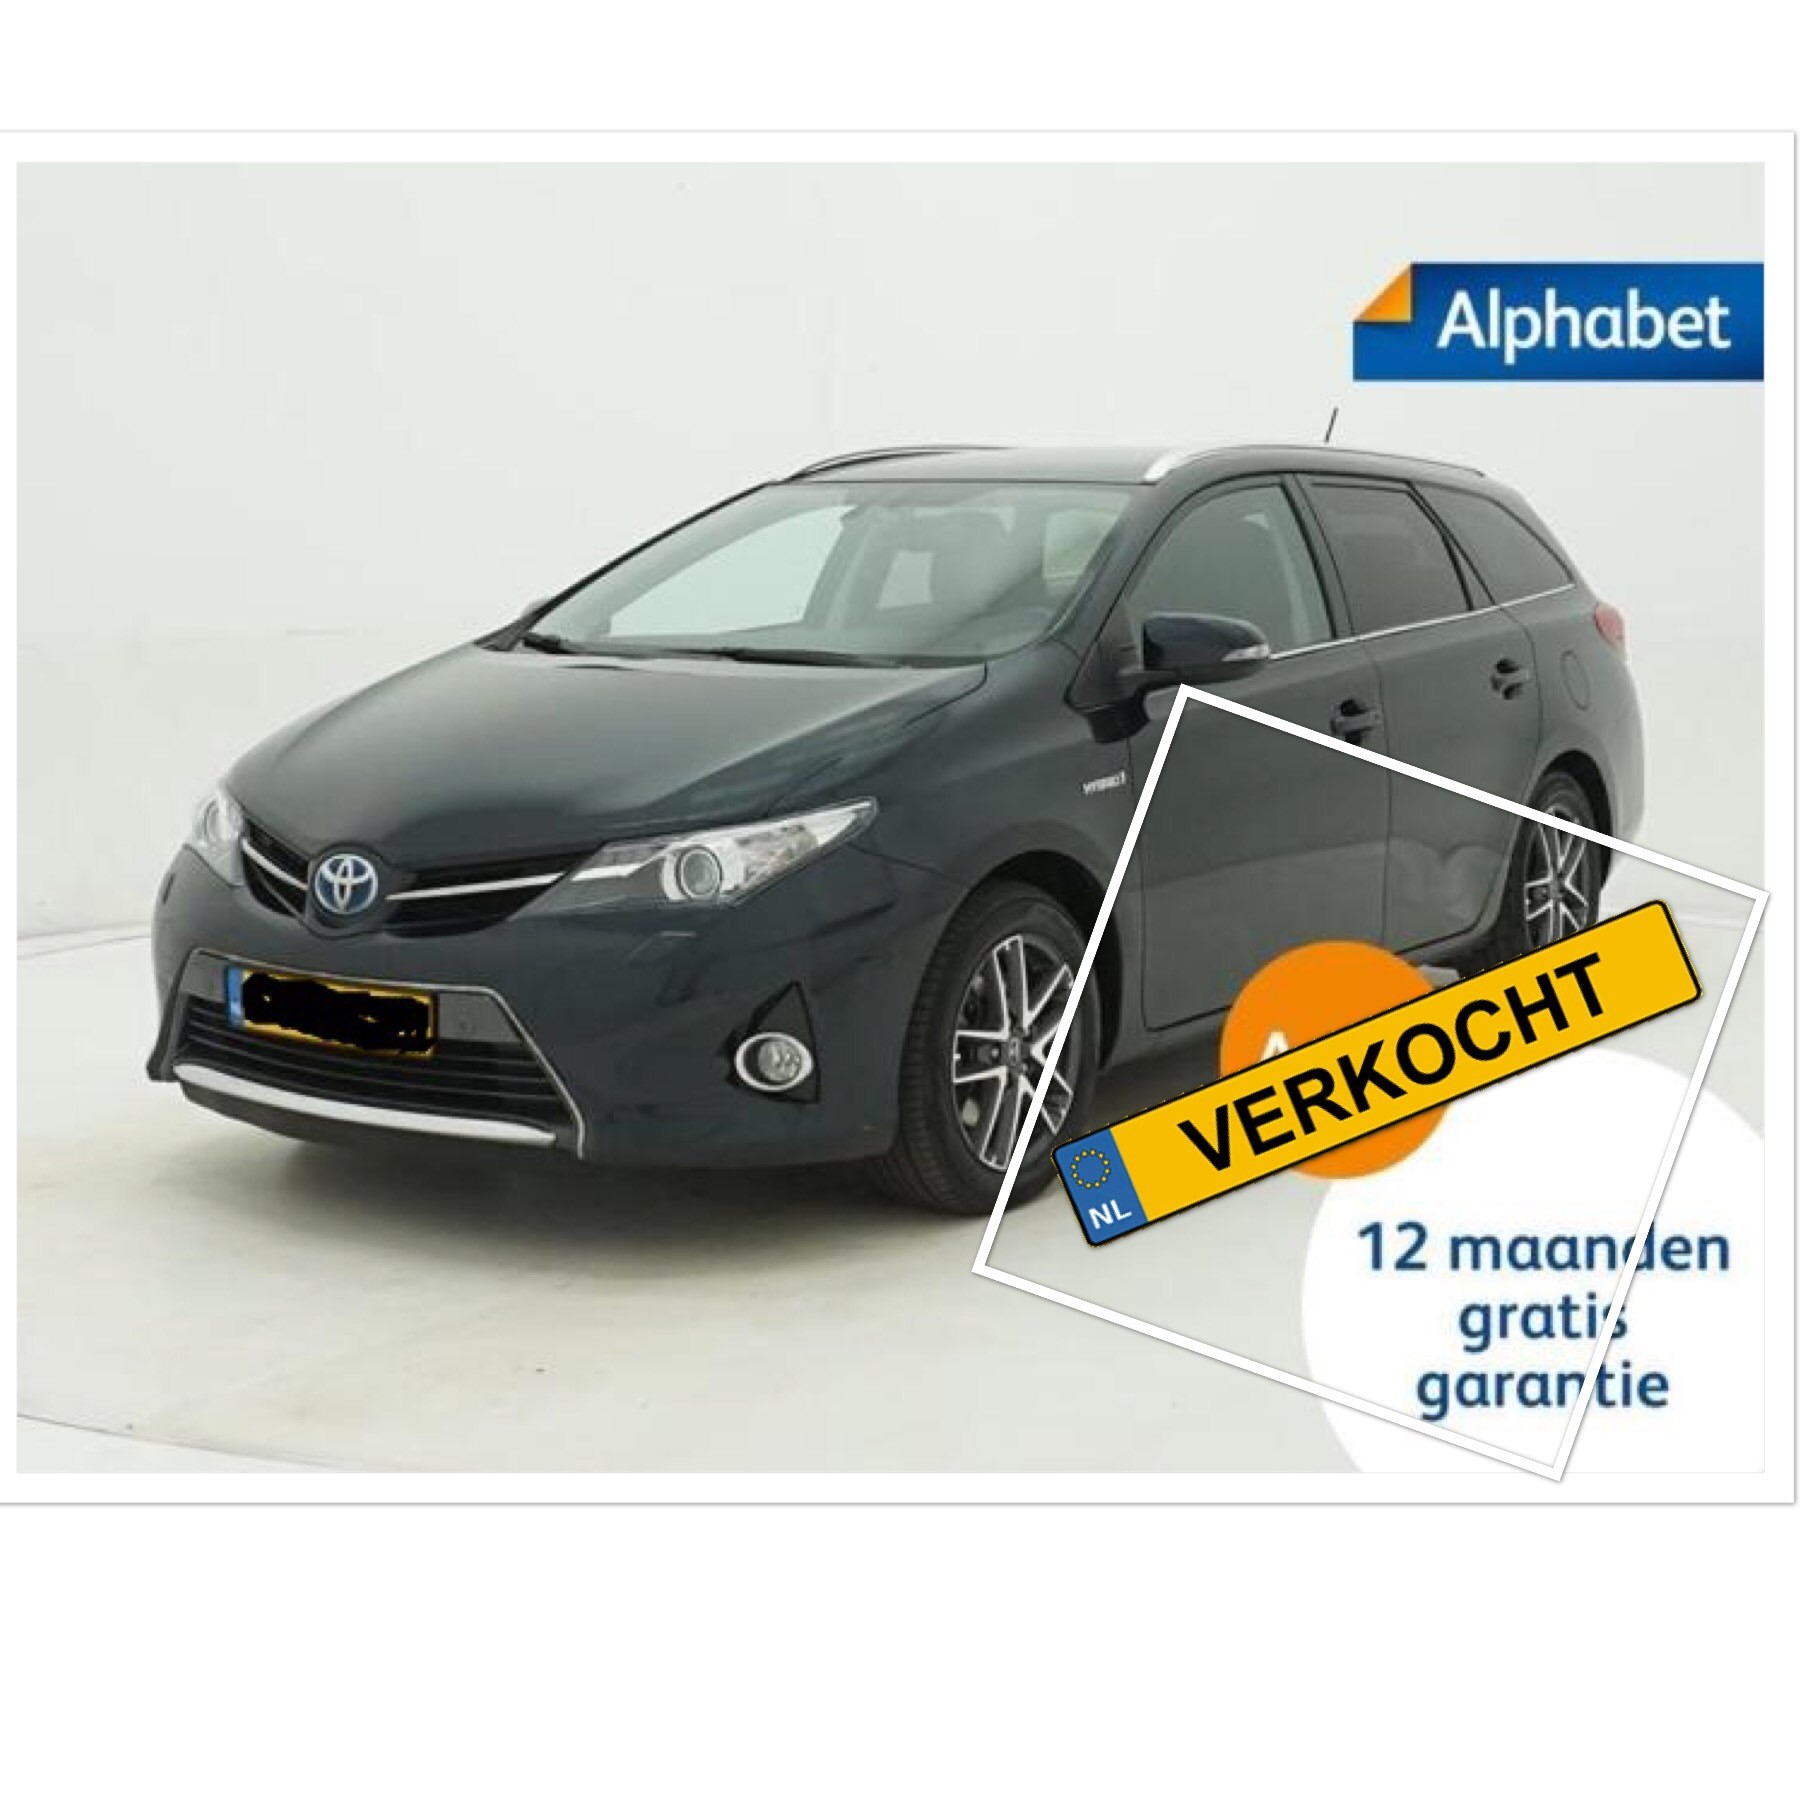 Toyota Auris | Alphabet Occasions Zwolle